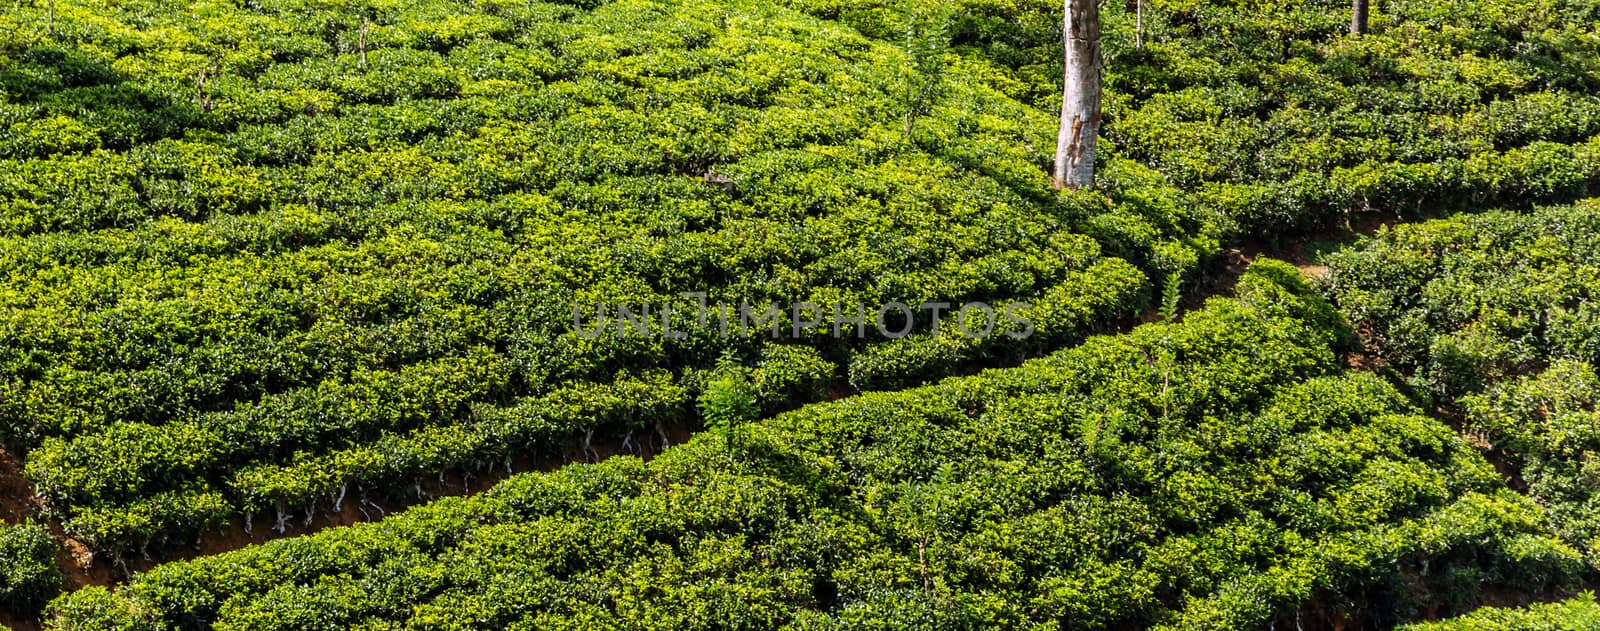 ceylon green tea plantation landscape